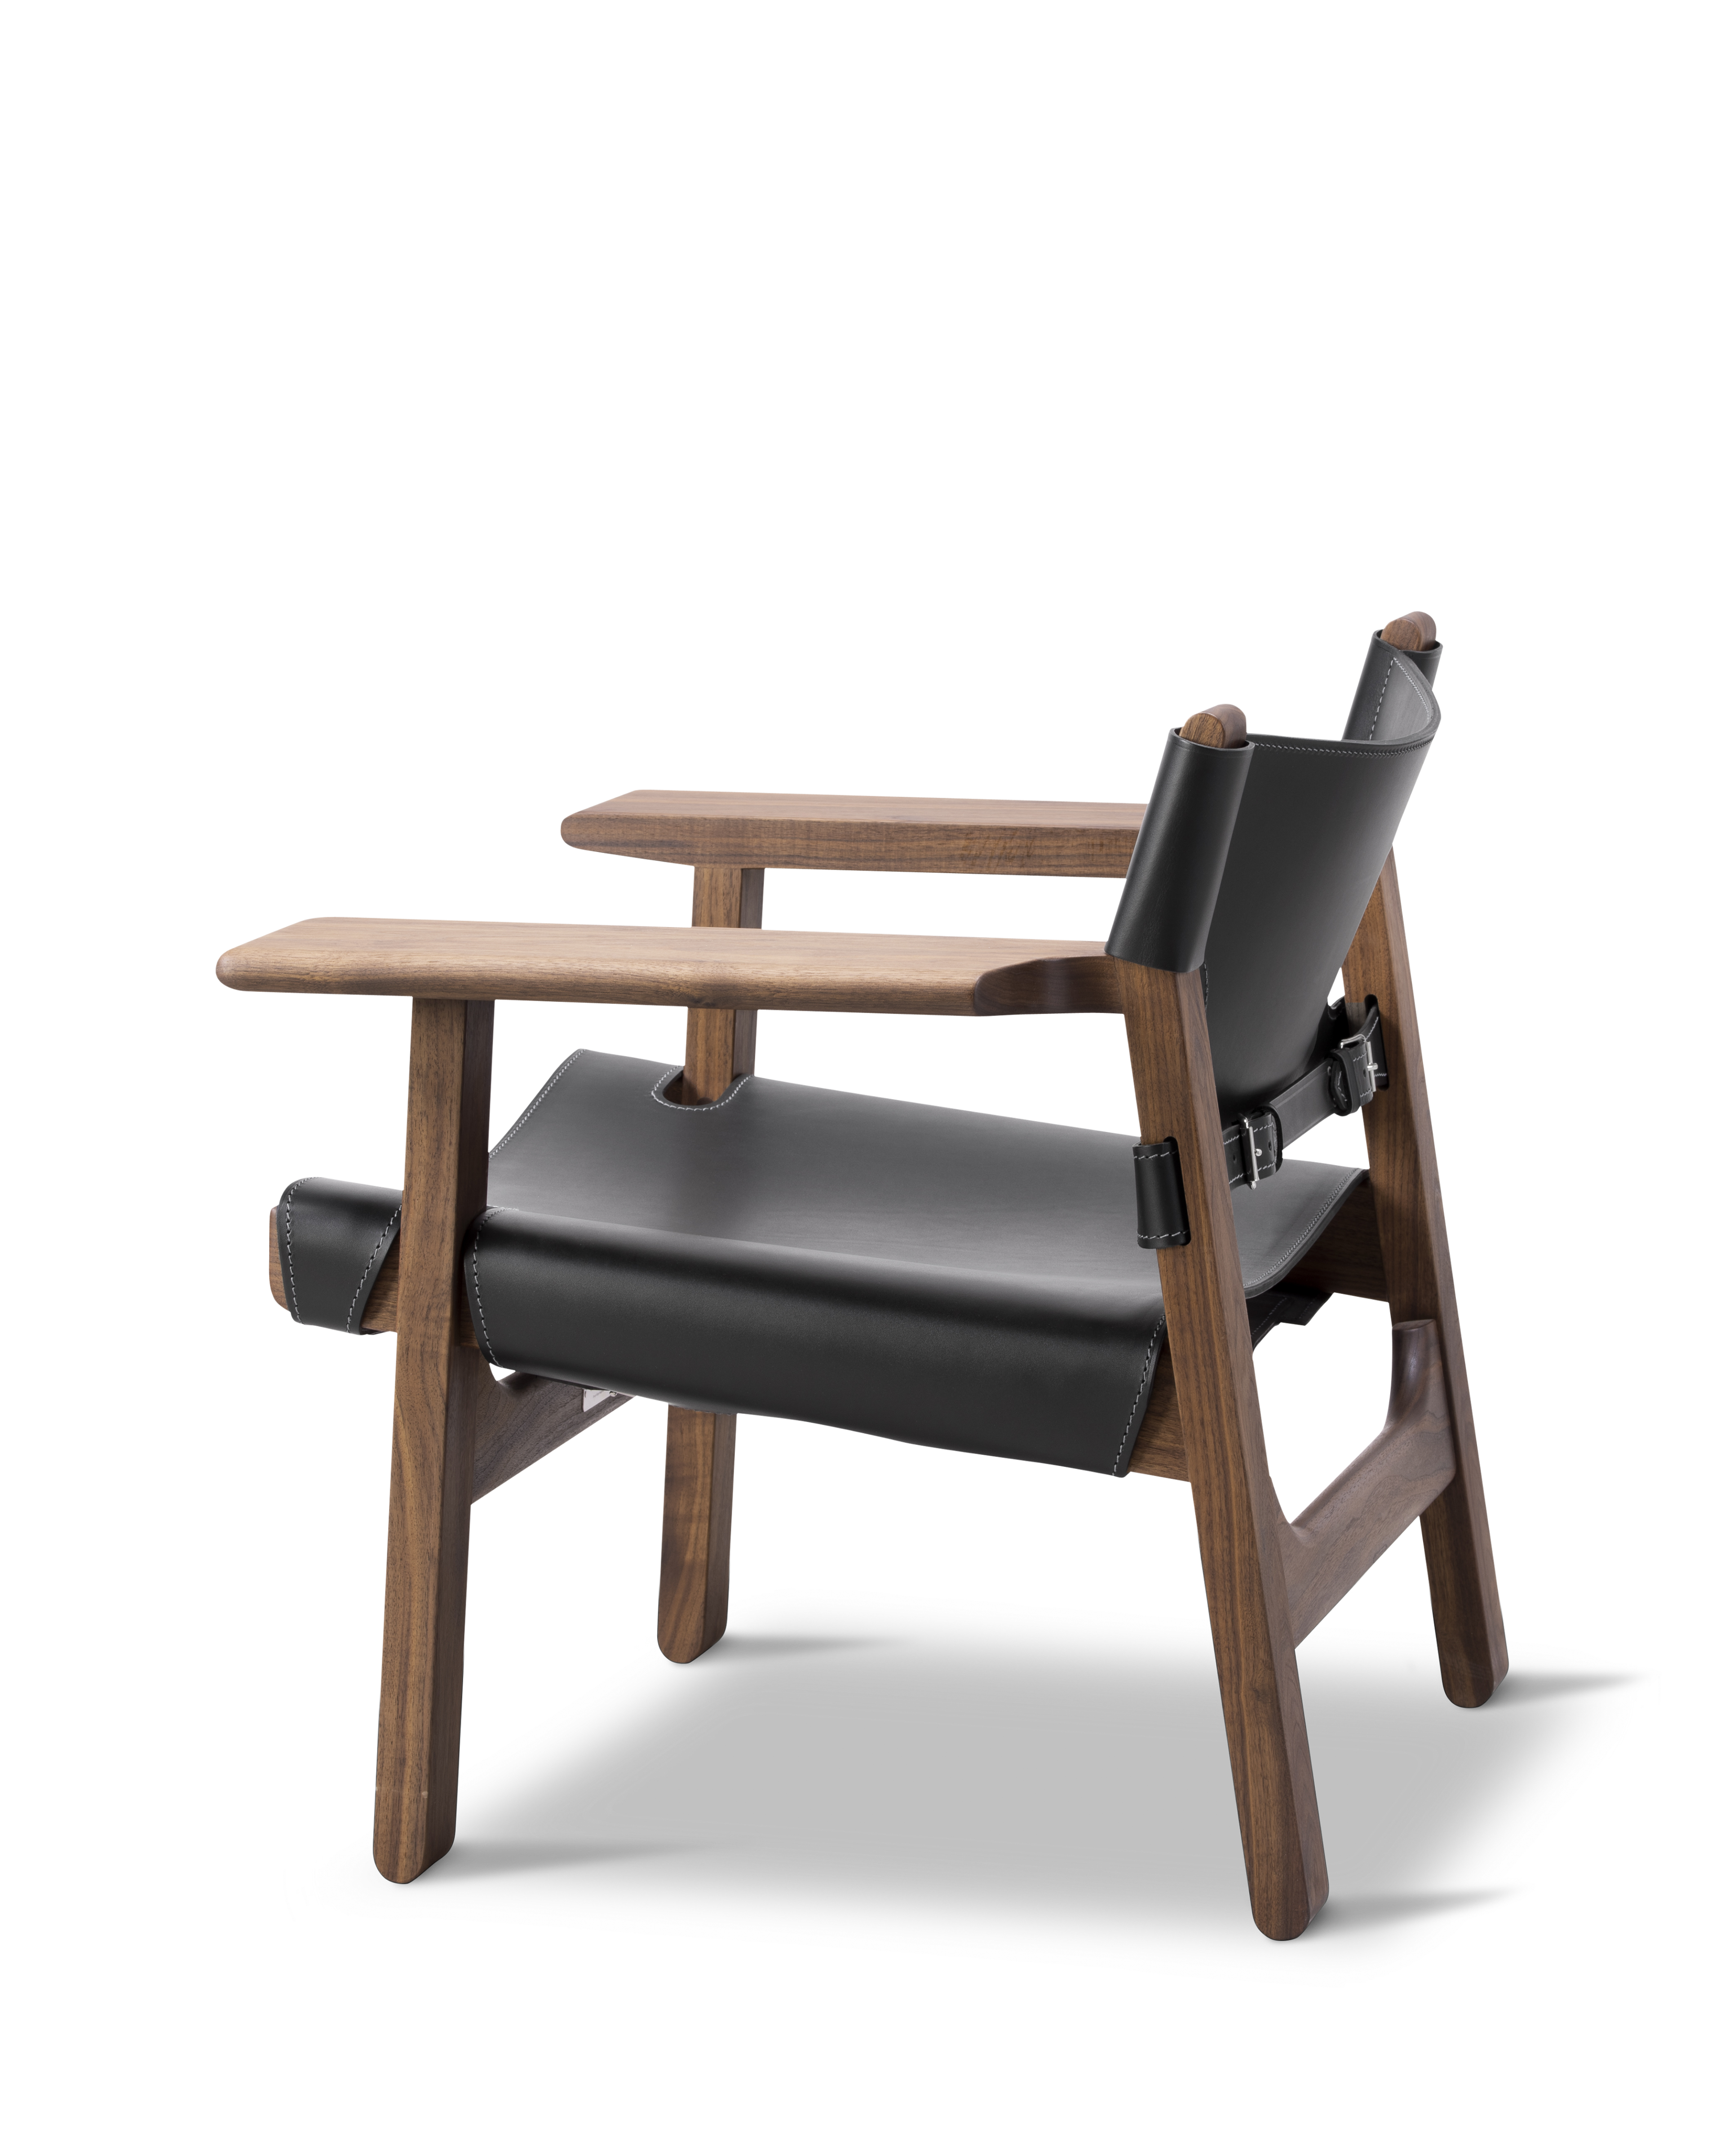 The Spanish Chair - Walnut / Black leather